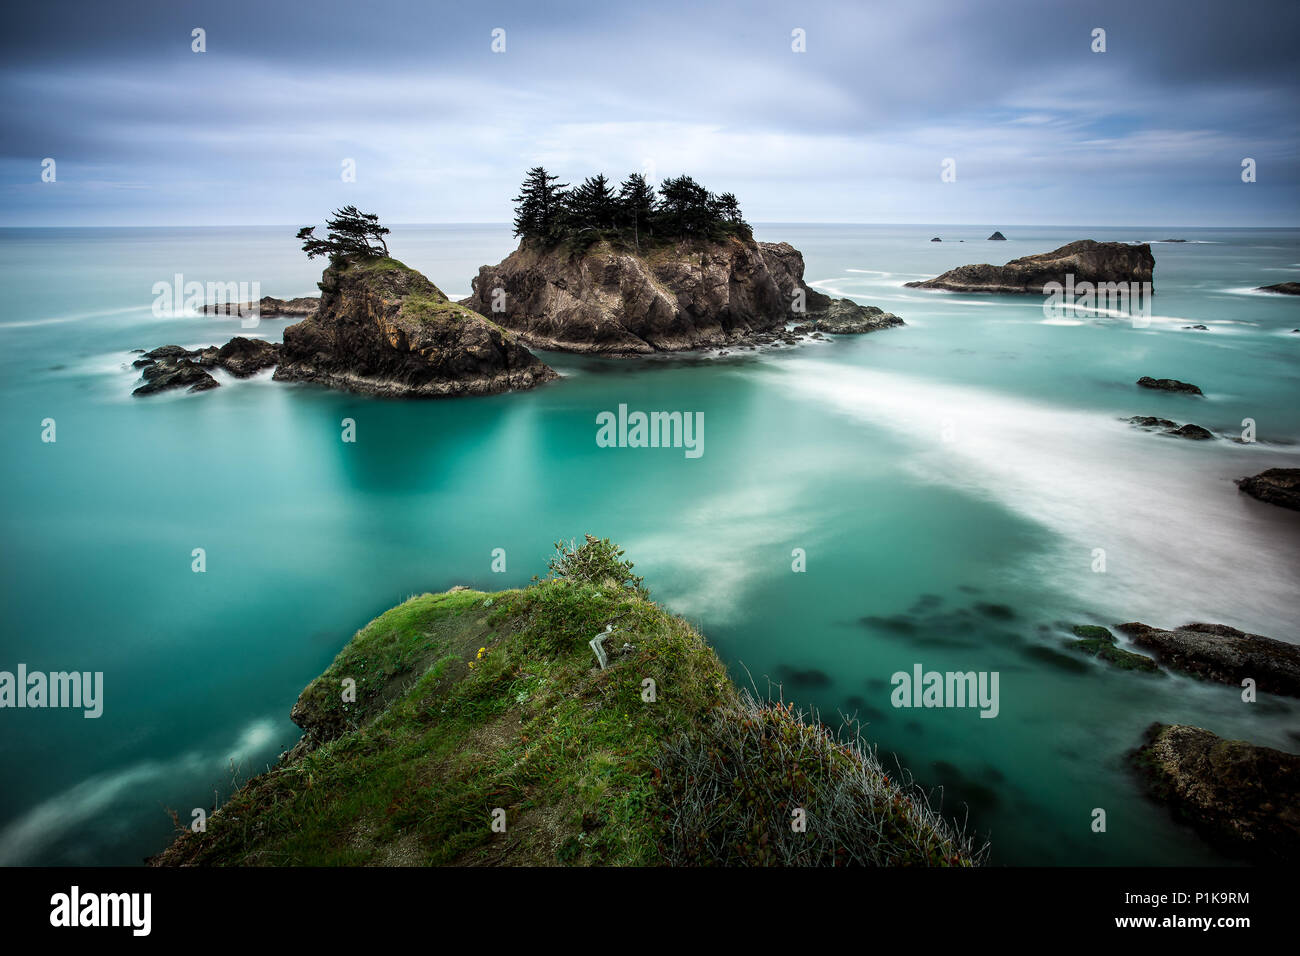 Coastal island landscape, Samuel H. Boardman State Park, Oregon, United States Stock Photo